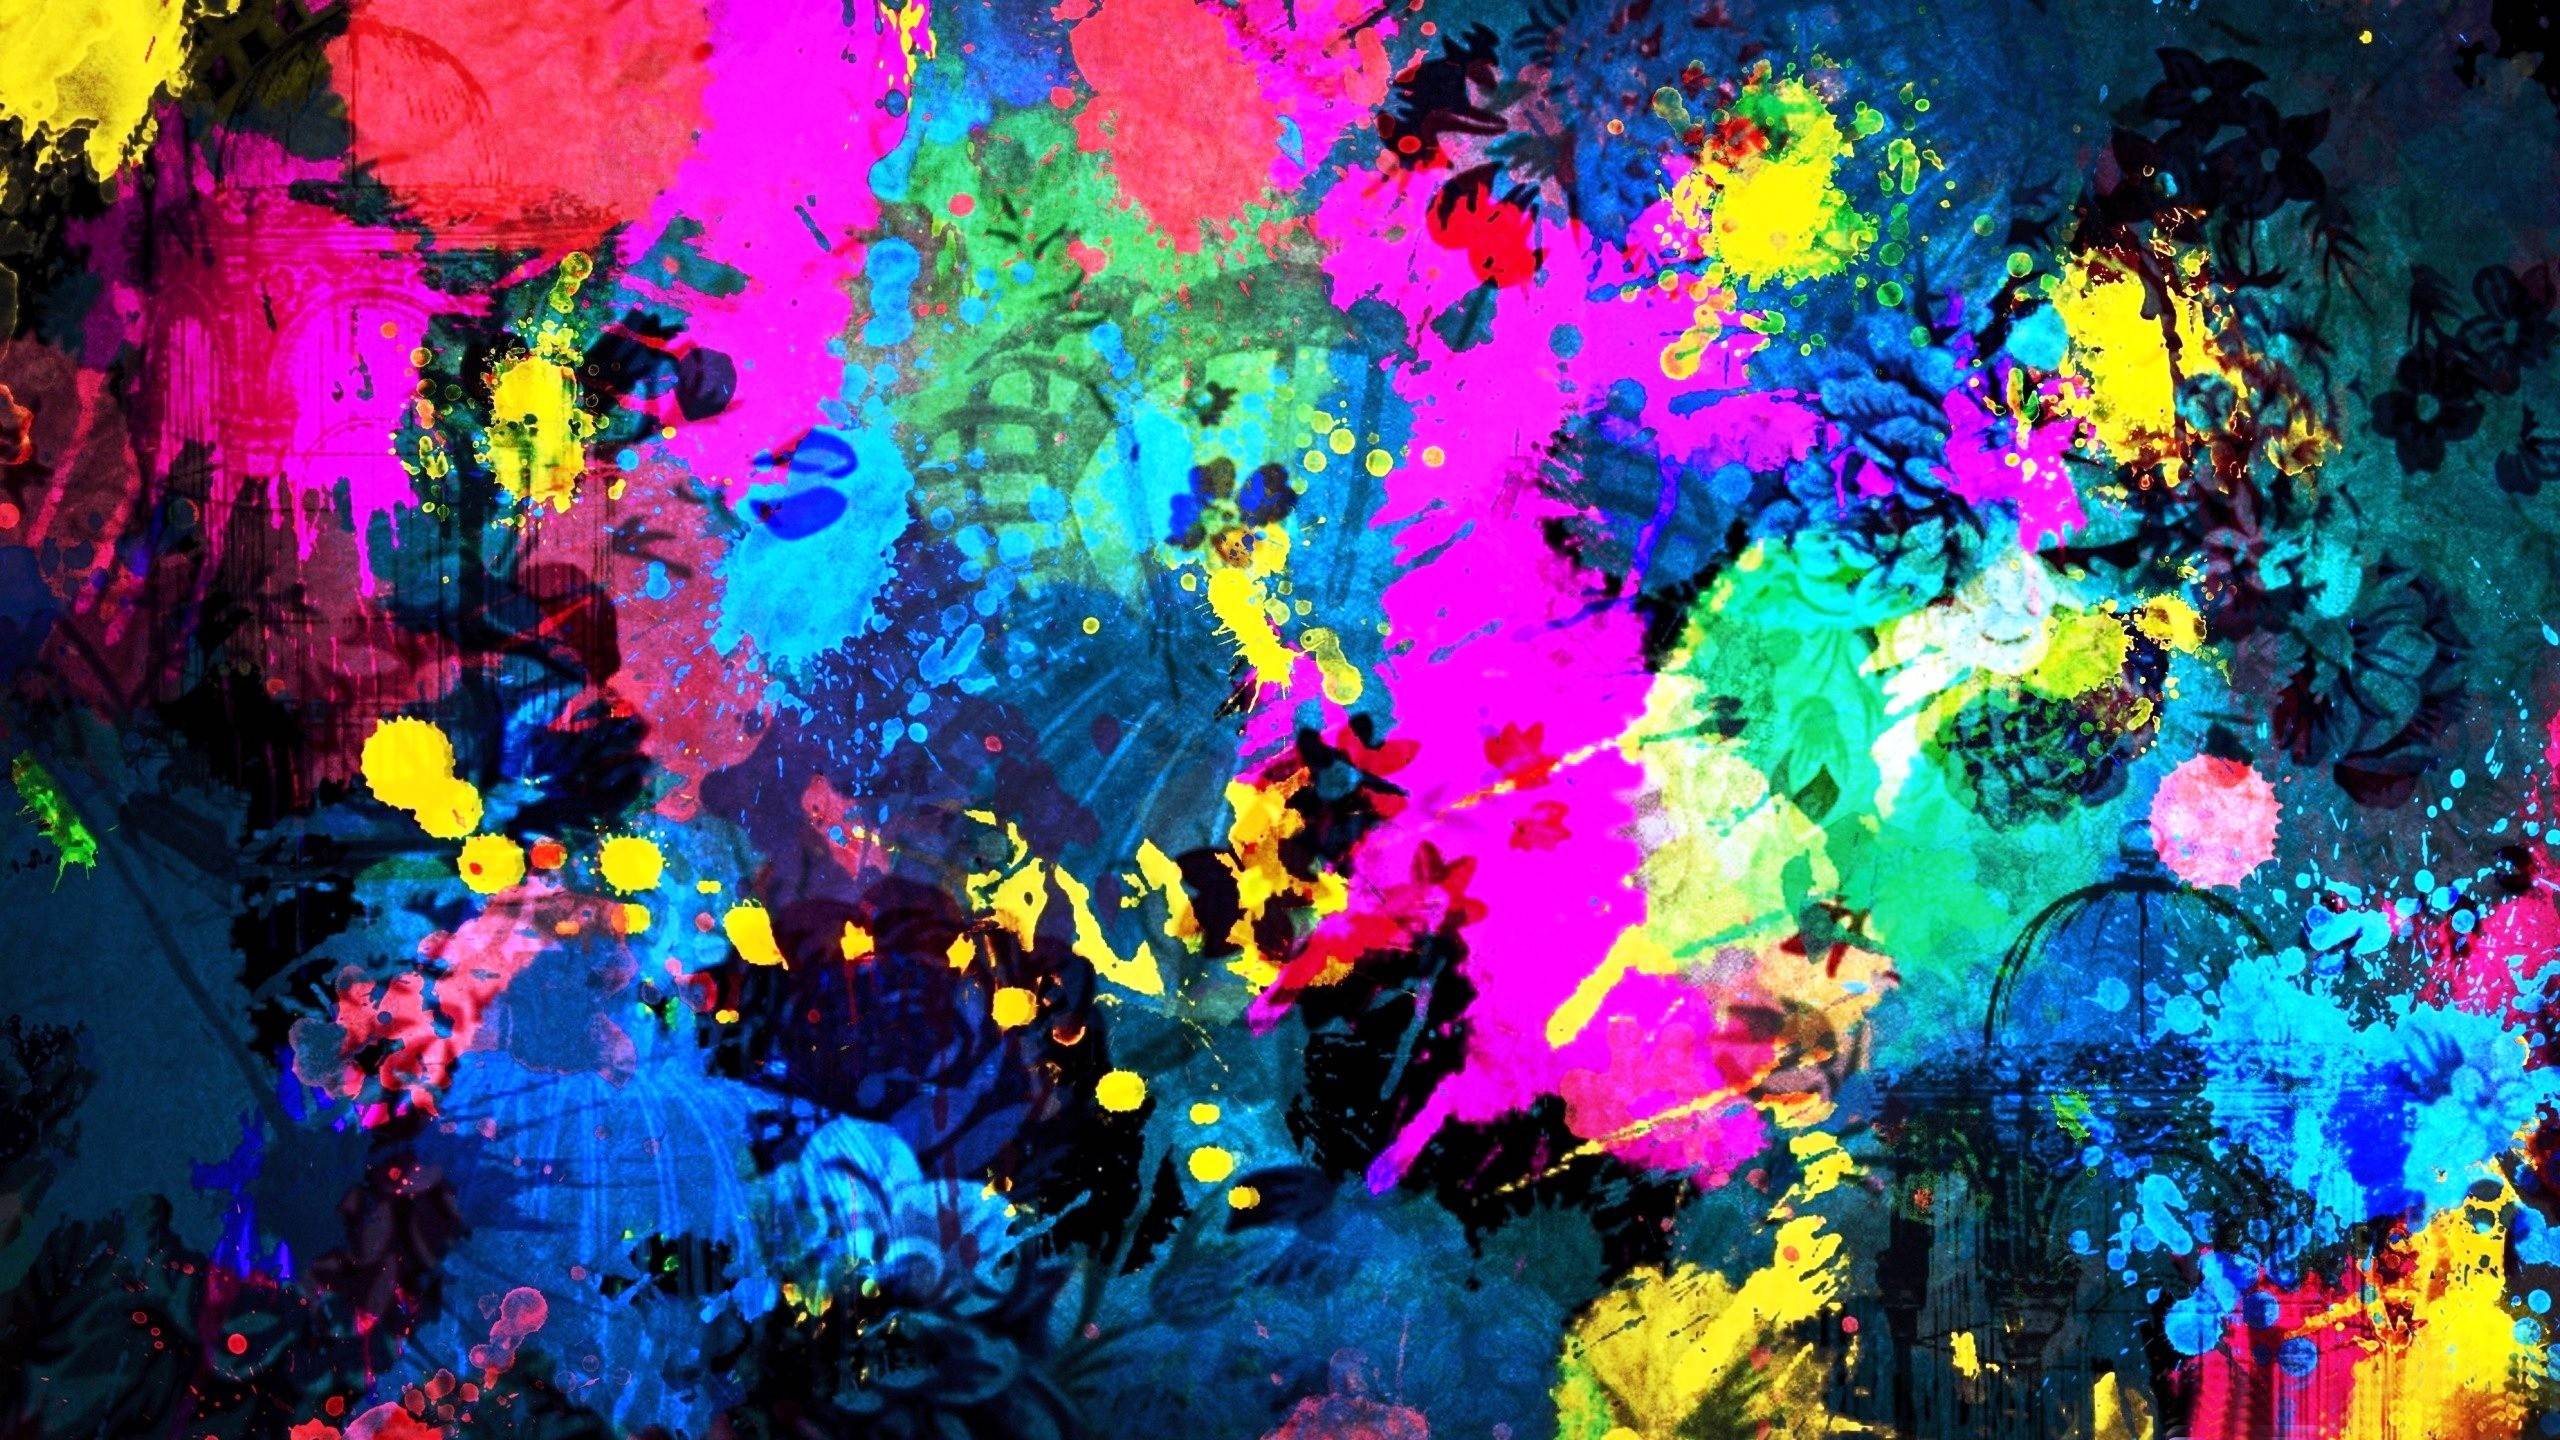 Abstract Art Background Wallpaper Download 5576 Full HD Wallpaper